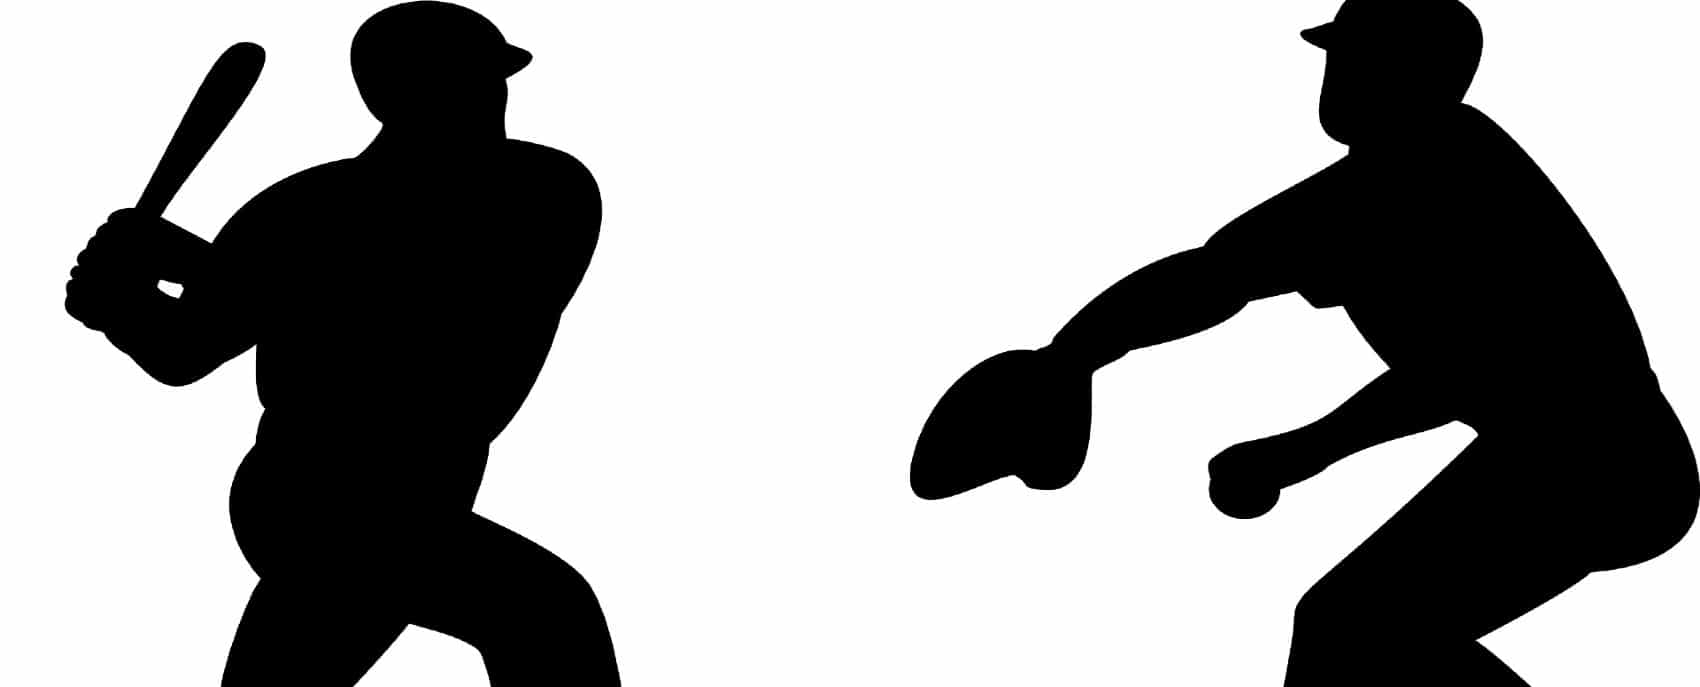 silhouette of baseball players